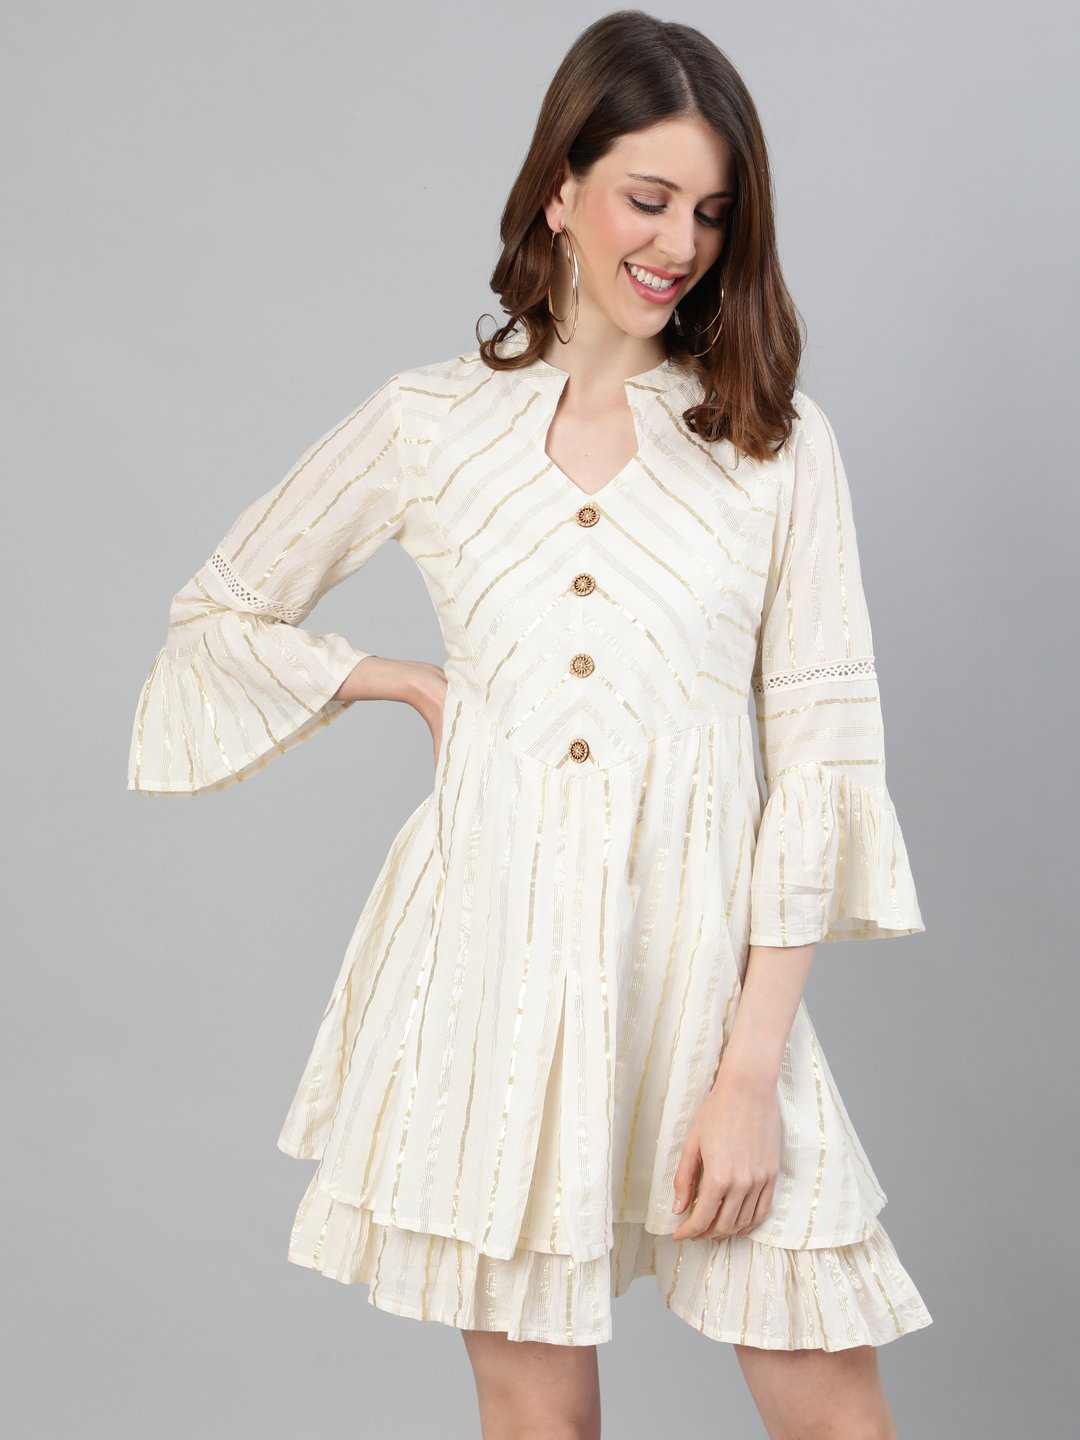 Ishin Women's Cotton Off White Lurex Embellished A-Line Layered Dress